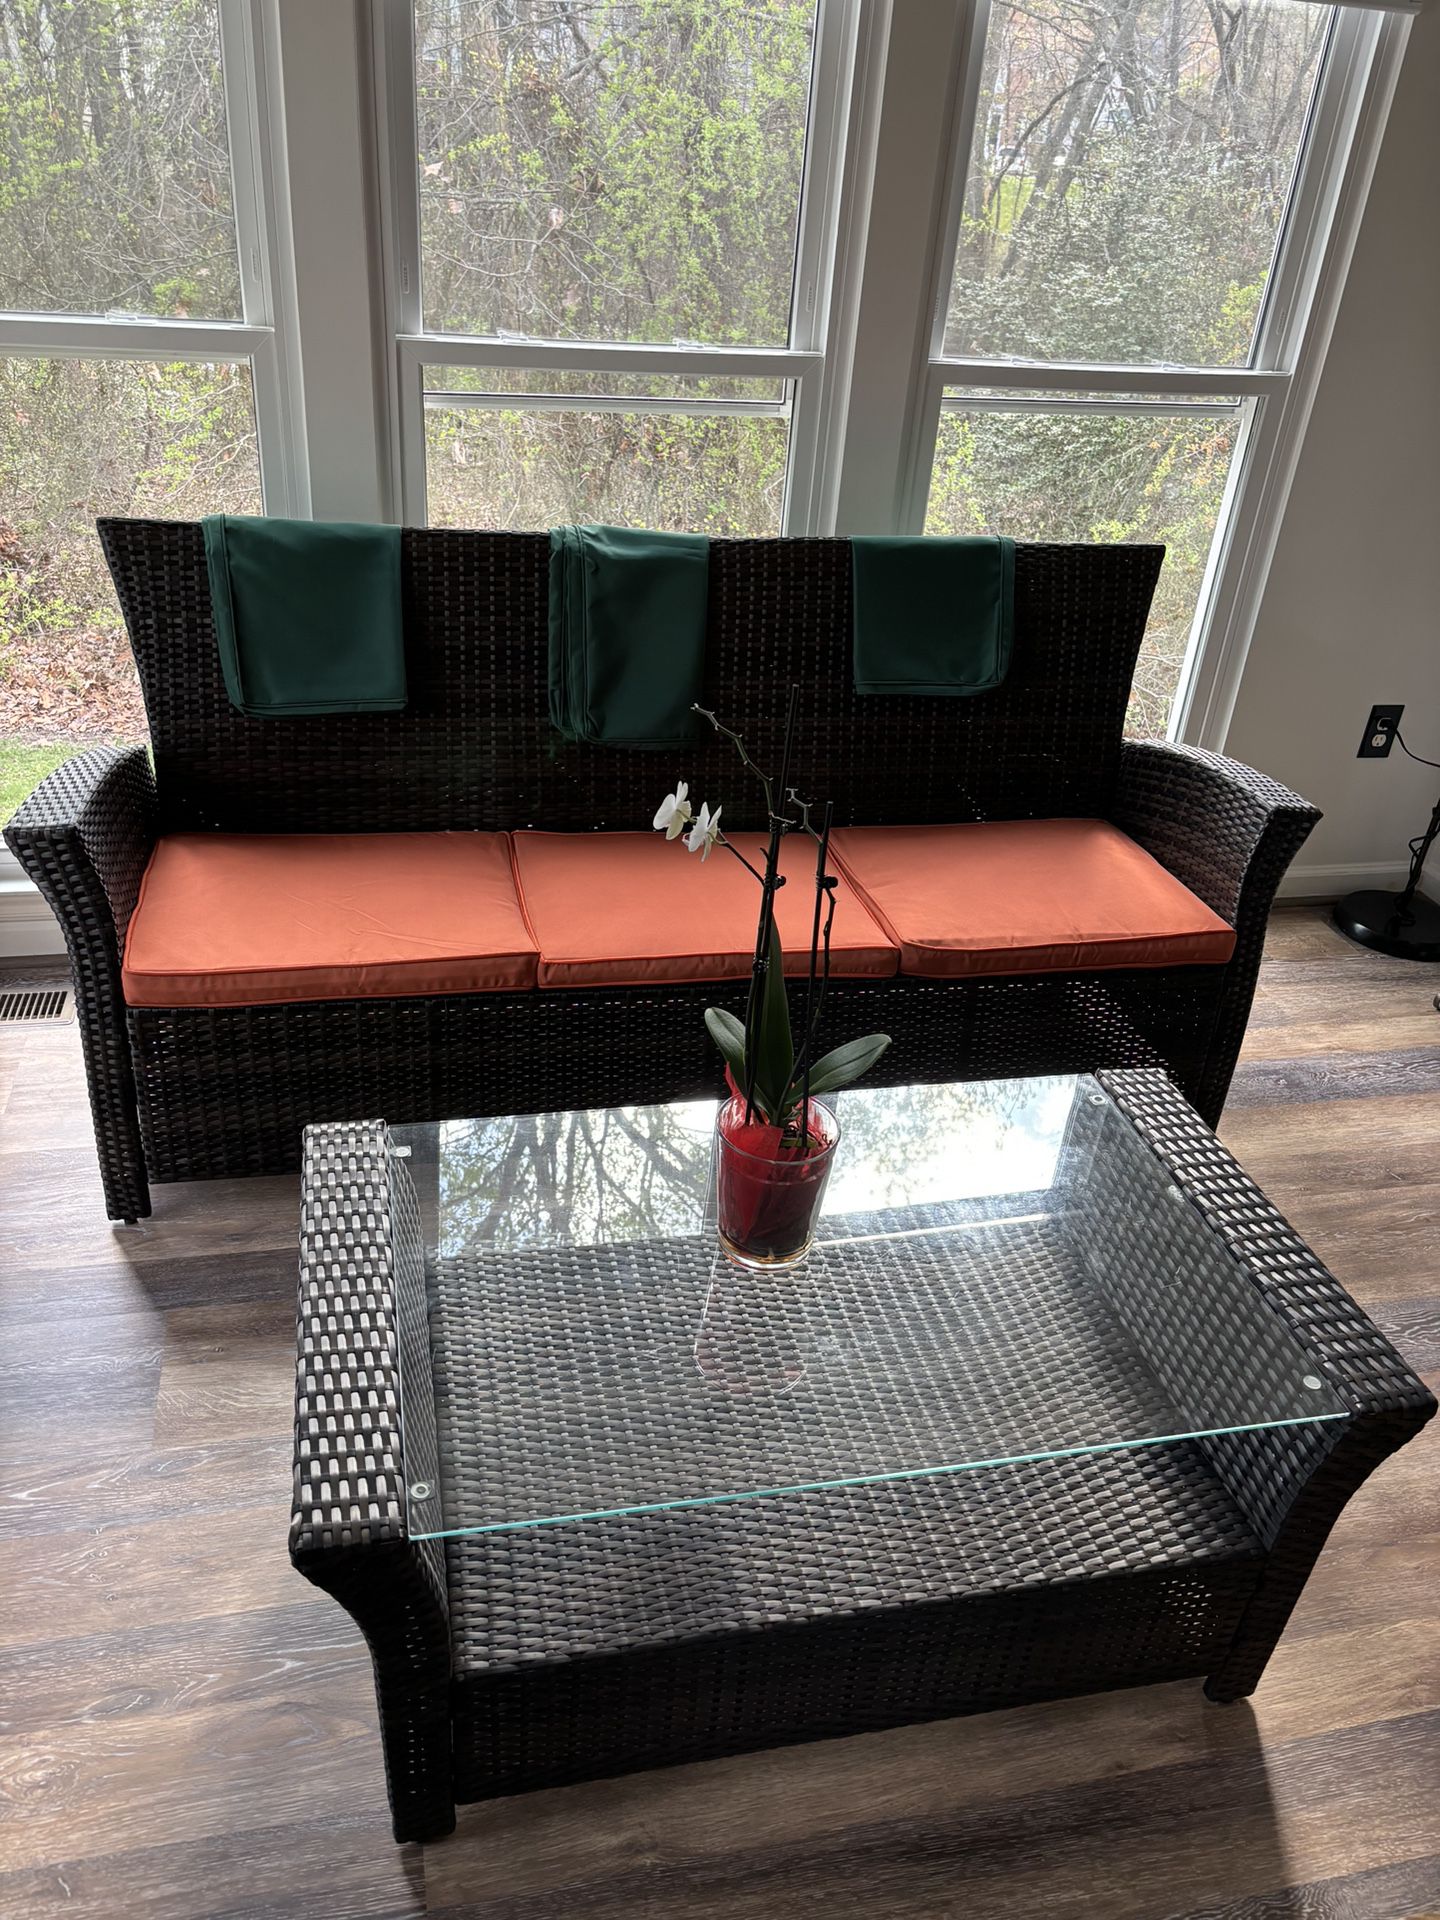 Sunroom / Outdoor Patio Furniture 